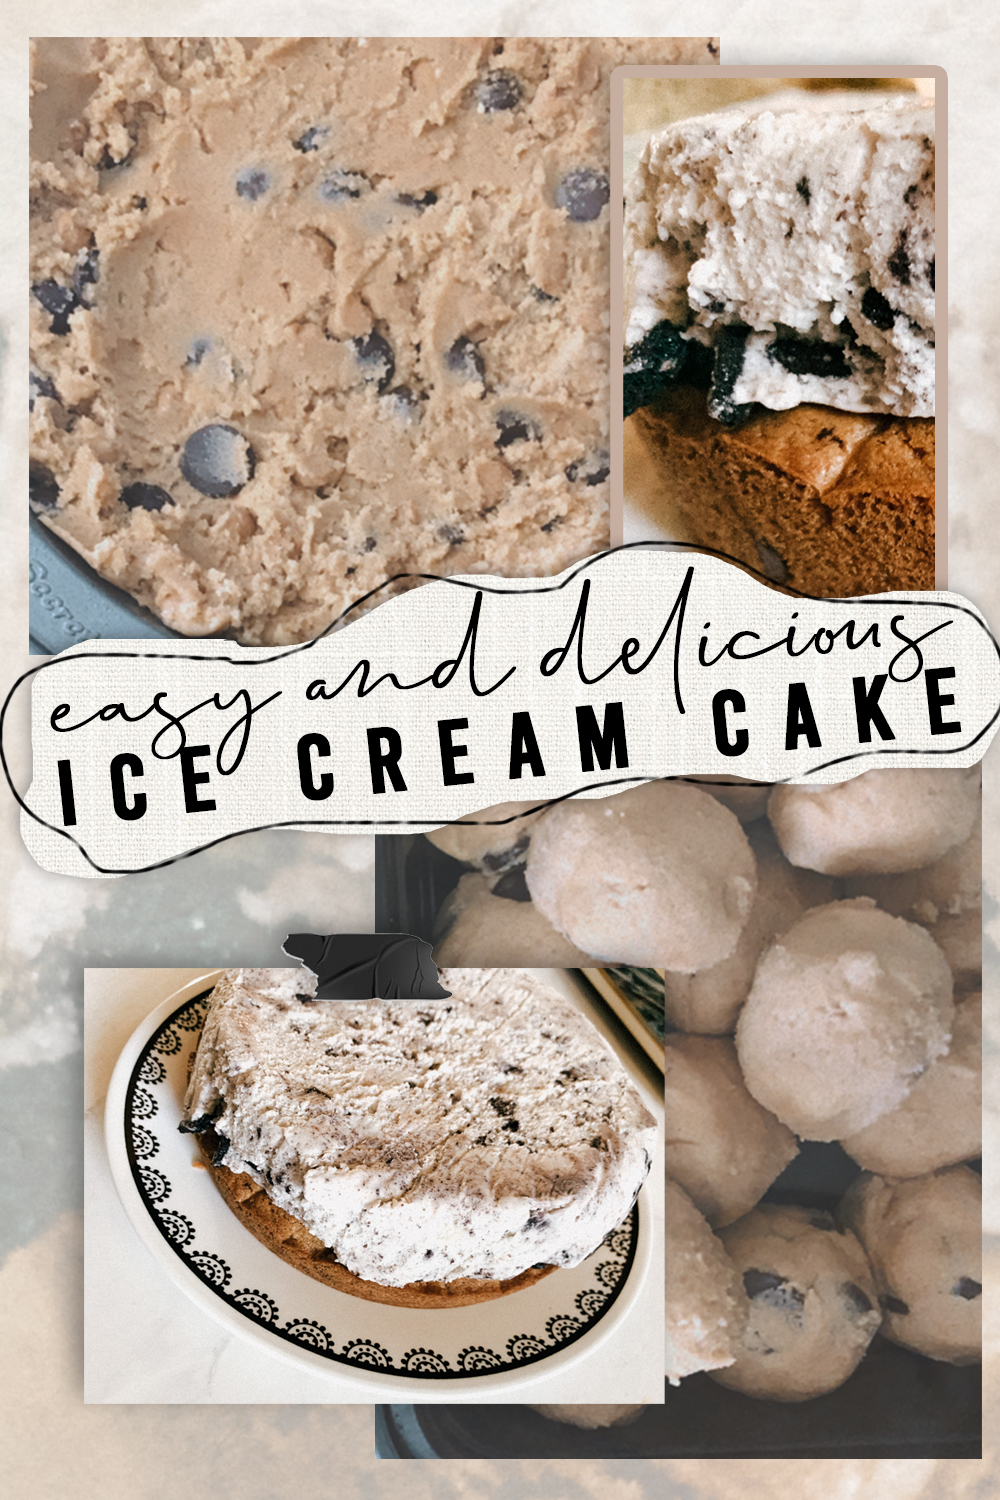 Easy and Delicious Cookie Ice Cream Cake Recipe #recipe #food #foodie #dessert #birthdaycake #icecreamcake #cookiecake #cookieicecreamcake #cake #pie #cookiecakerecipe #simplybysimone Simone Piliero